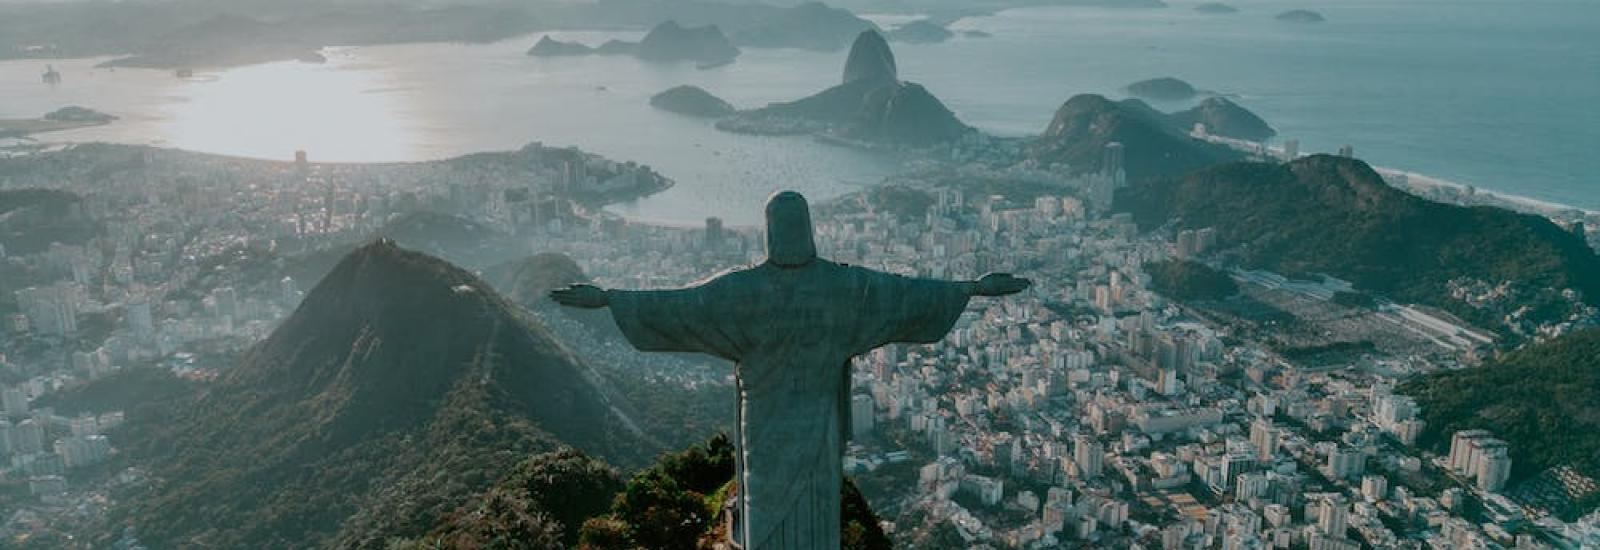 Image of Christ the Redeemer, Brazil